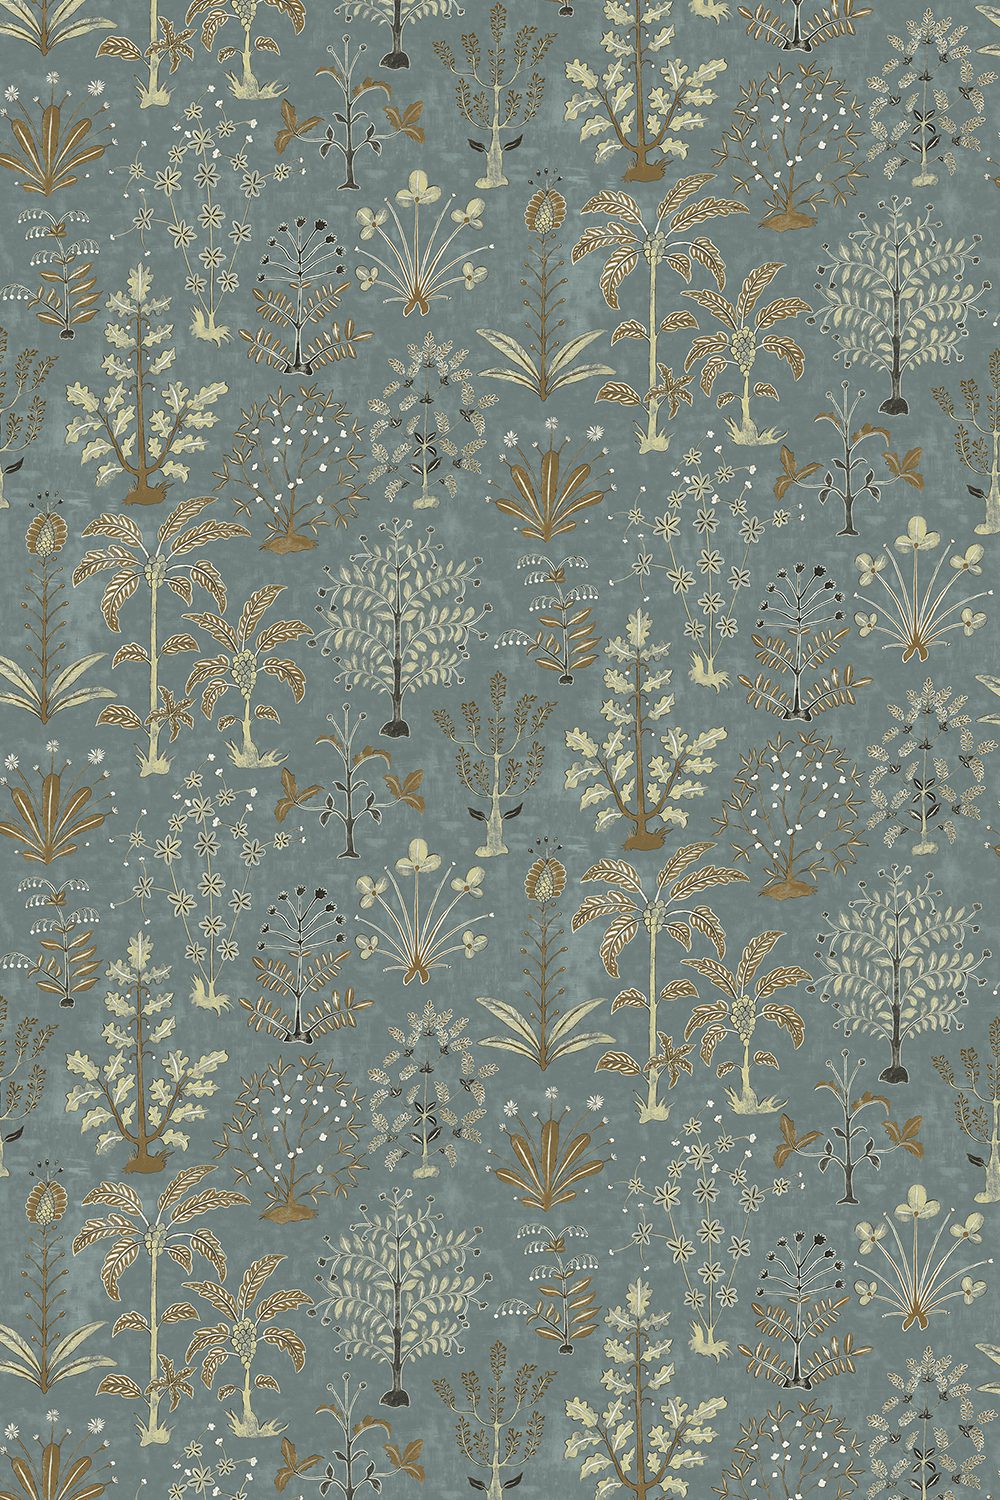 Josephine-munsey-wallpaper-cynthia-tree-soft-design-soft-grey-blue-brown-olive-stone-nature-inspired-design